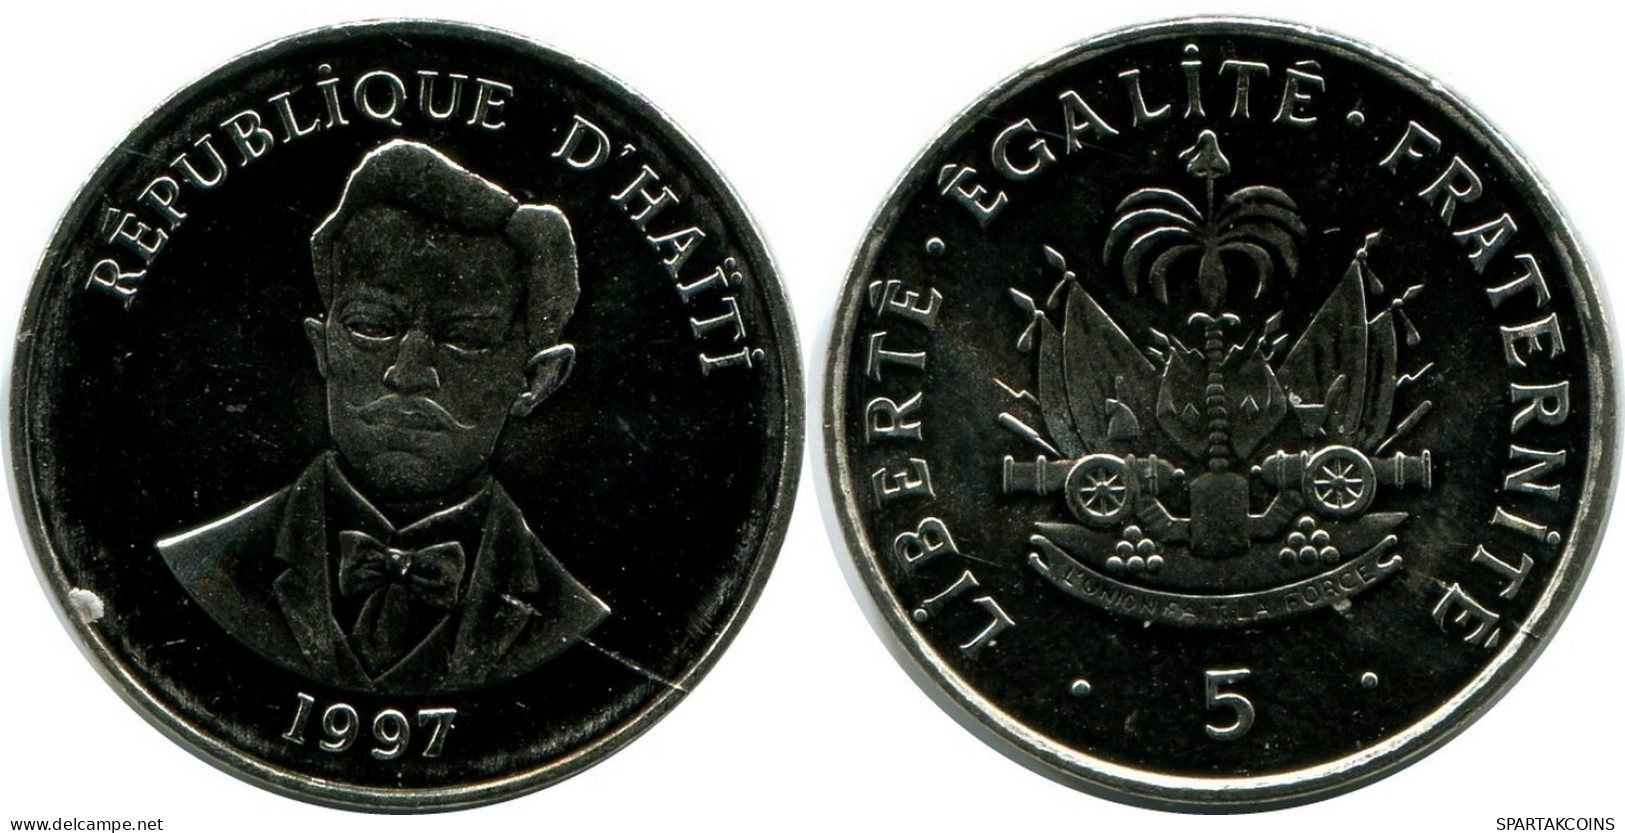 5 CENTIMES 1997 HAITI UNC Coin #M10396.U.A - Haití